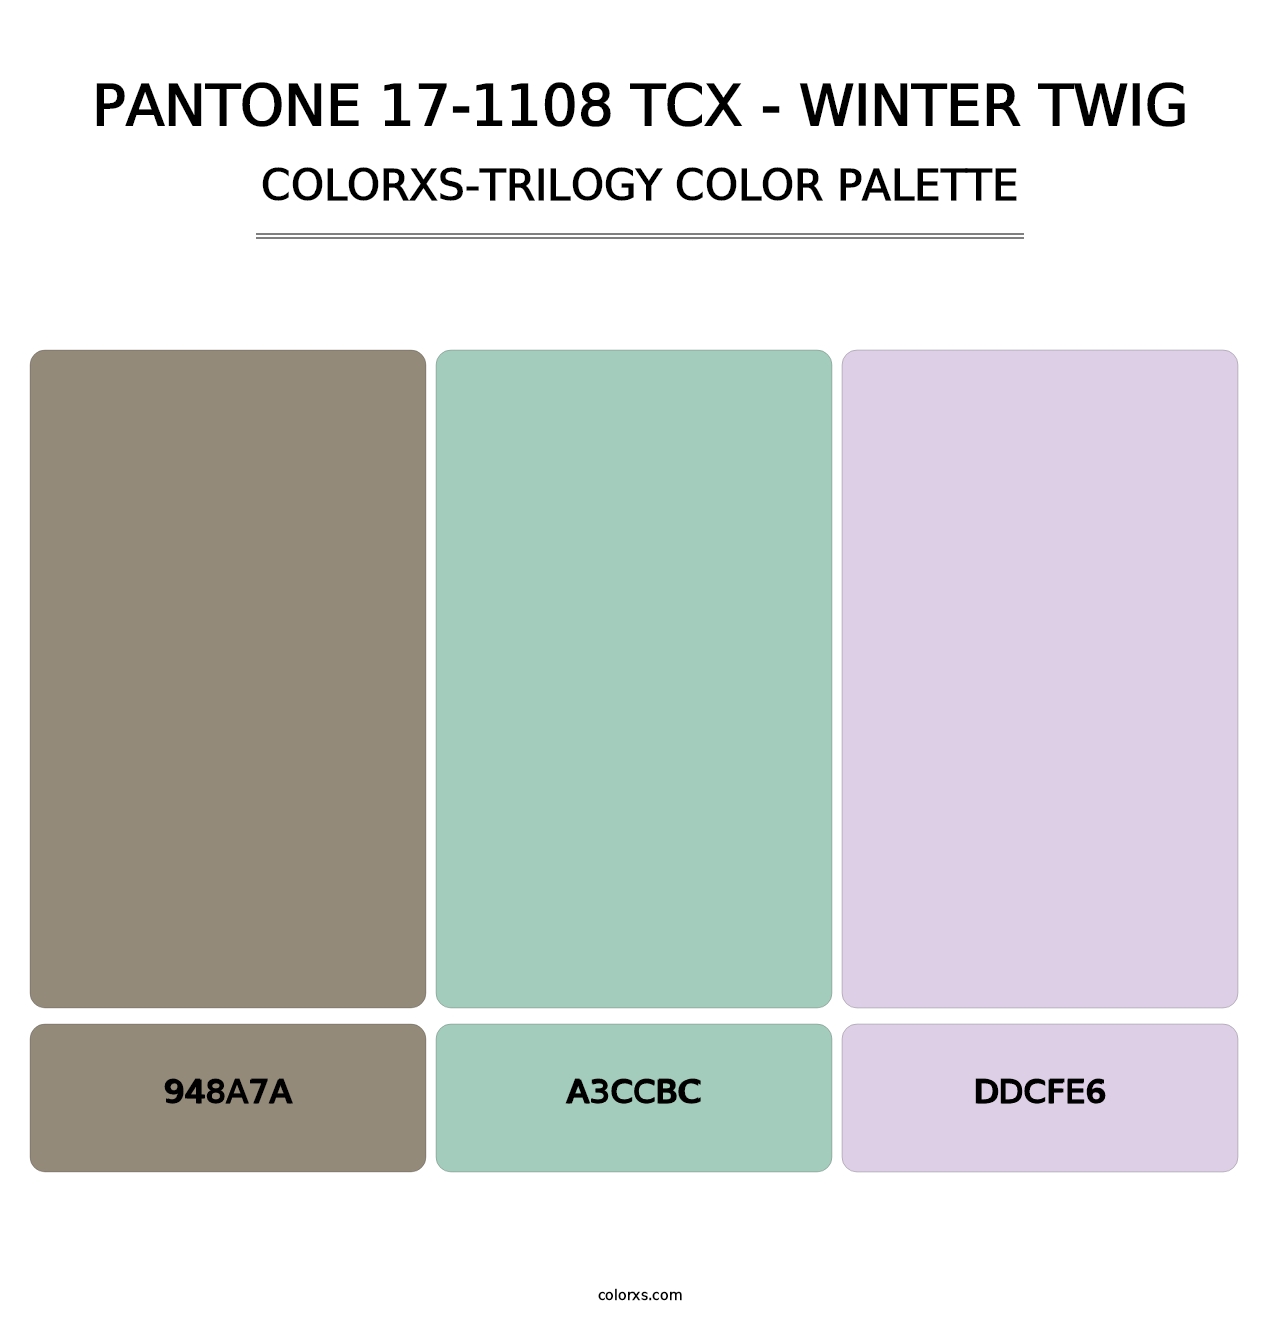 PANTONE 17-1108 TCX - Winter Twig - Colorxs Trilogy Palette